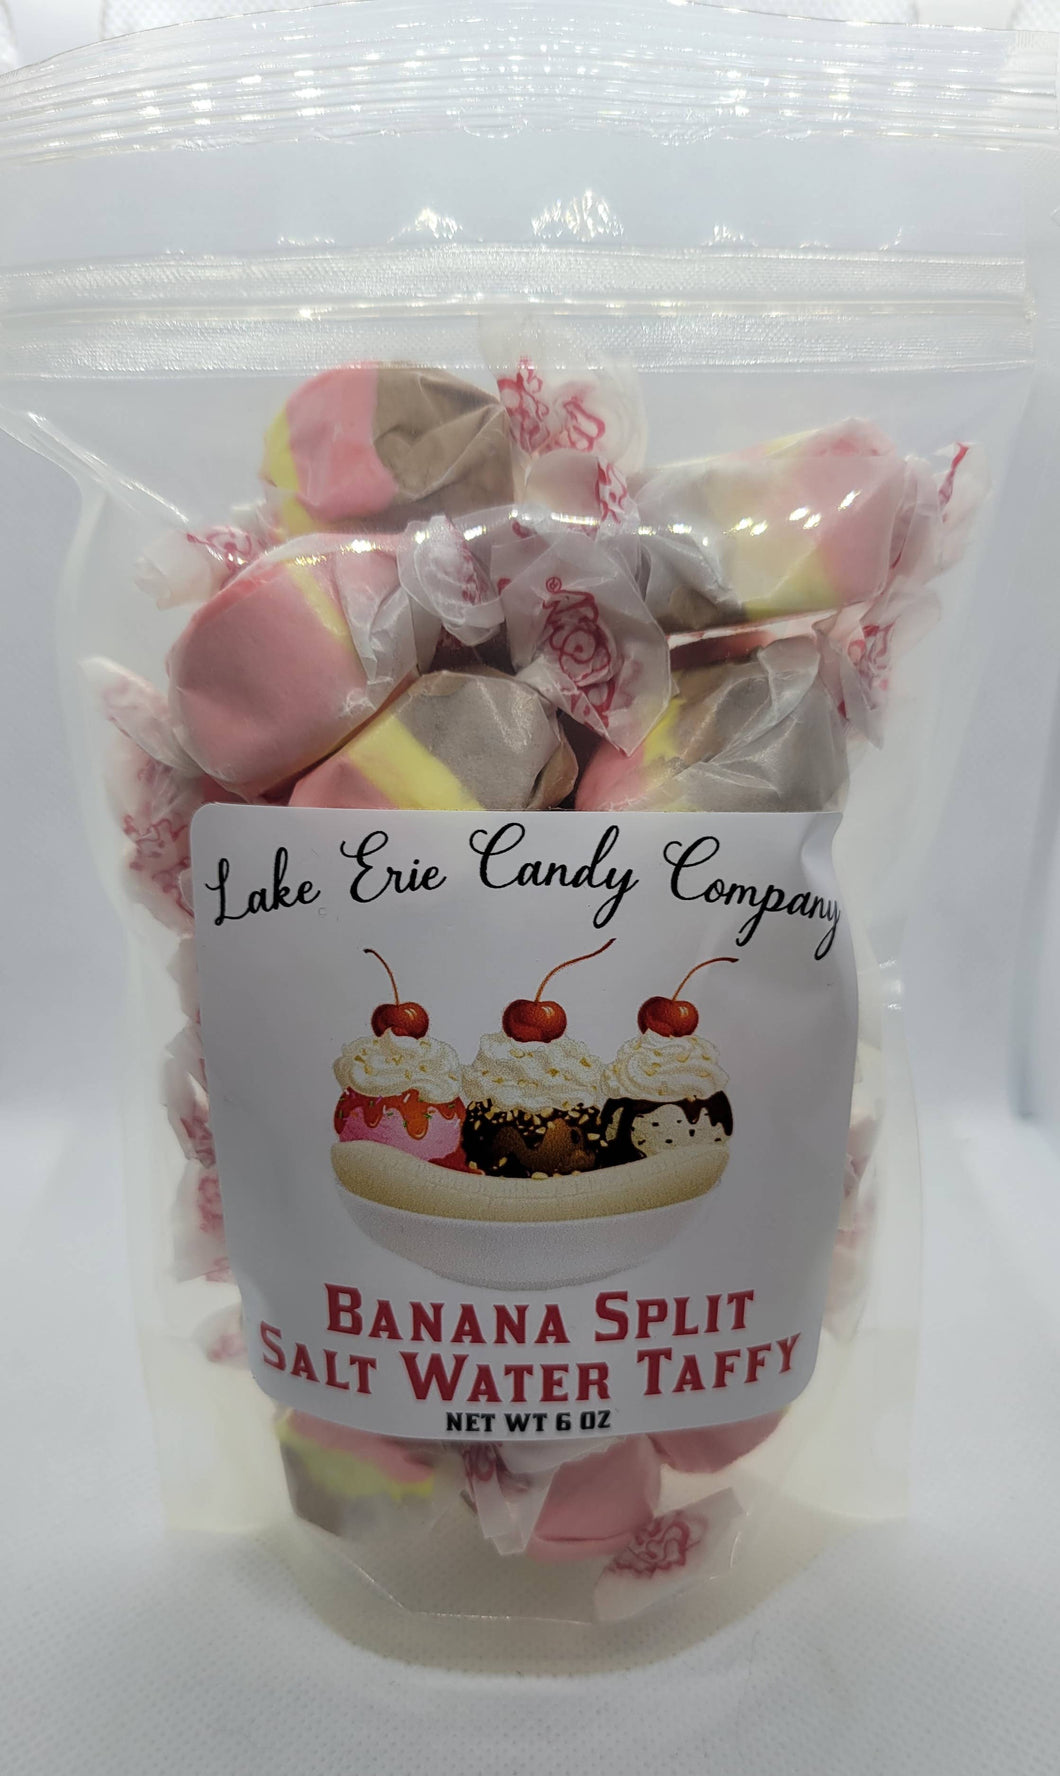 Lake Erie Candy Company - Banana Split Salt Water Taffy